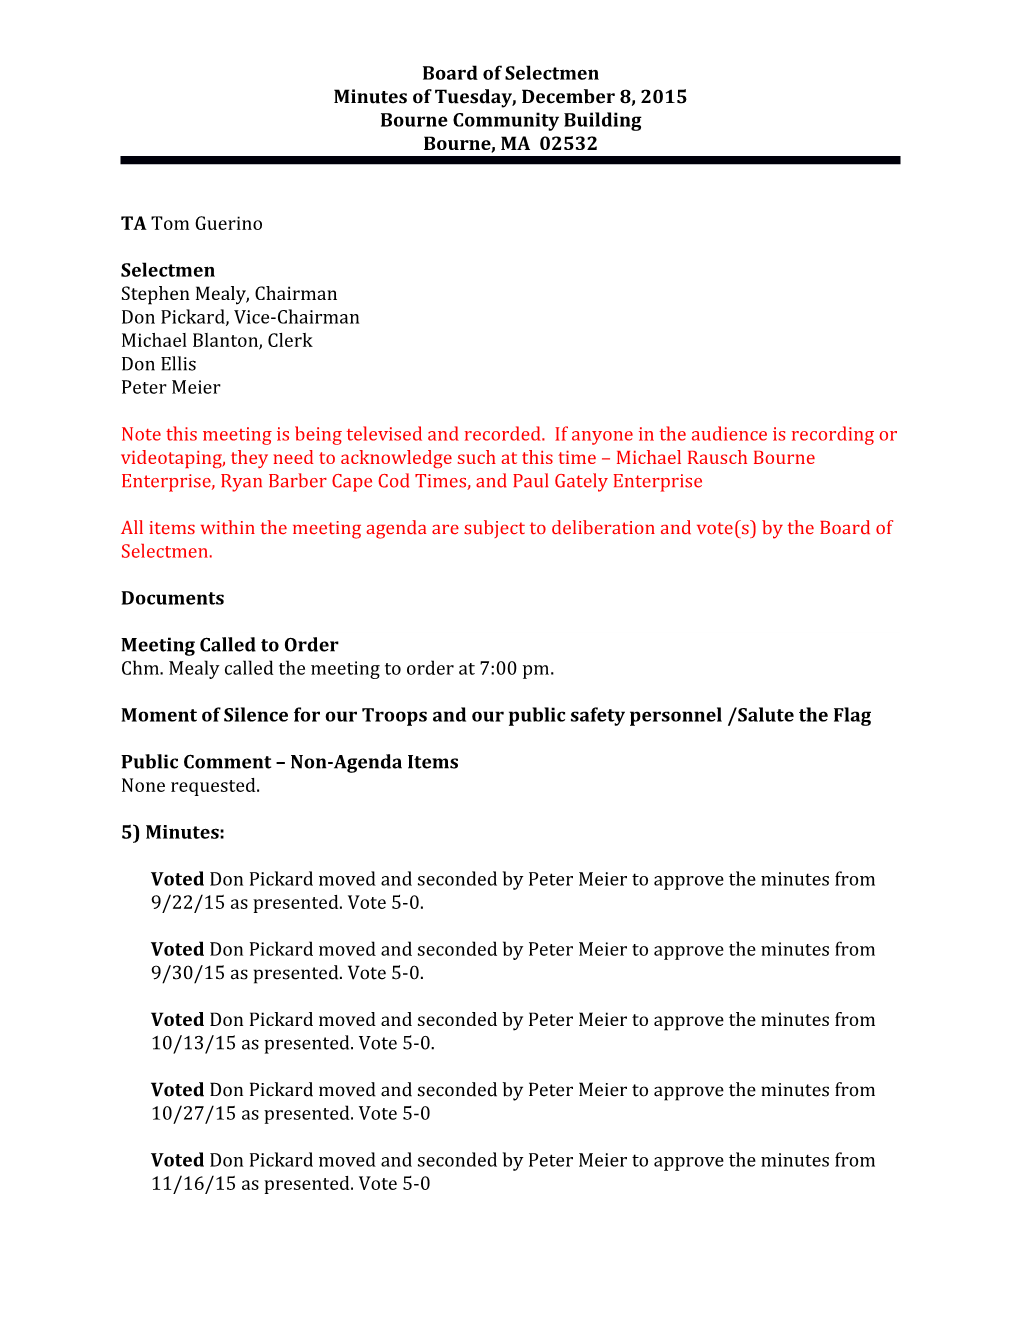 Board of Selectmen S Minutes December 8, 2015